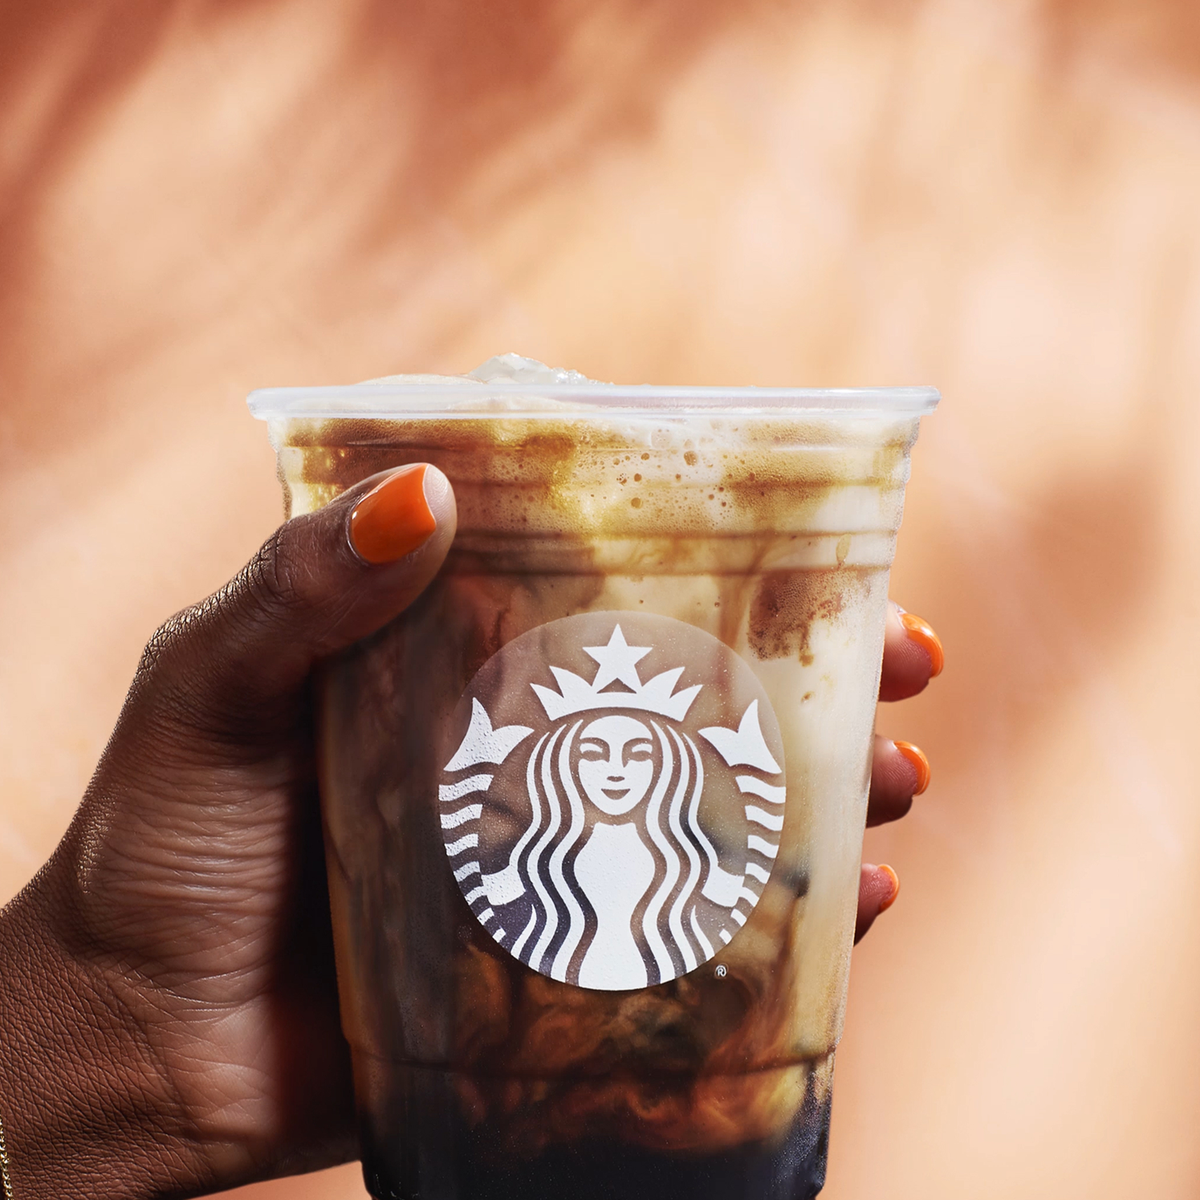 Six grande cold coffee drinks under 200 calories - Starbucks Stories